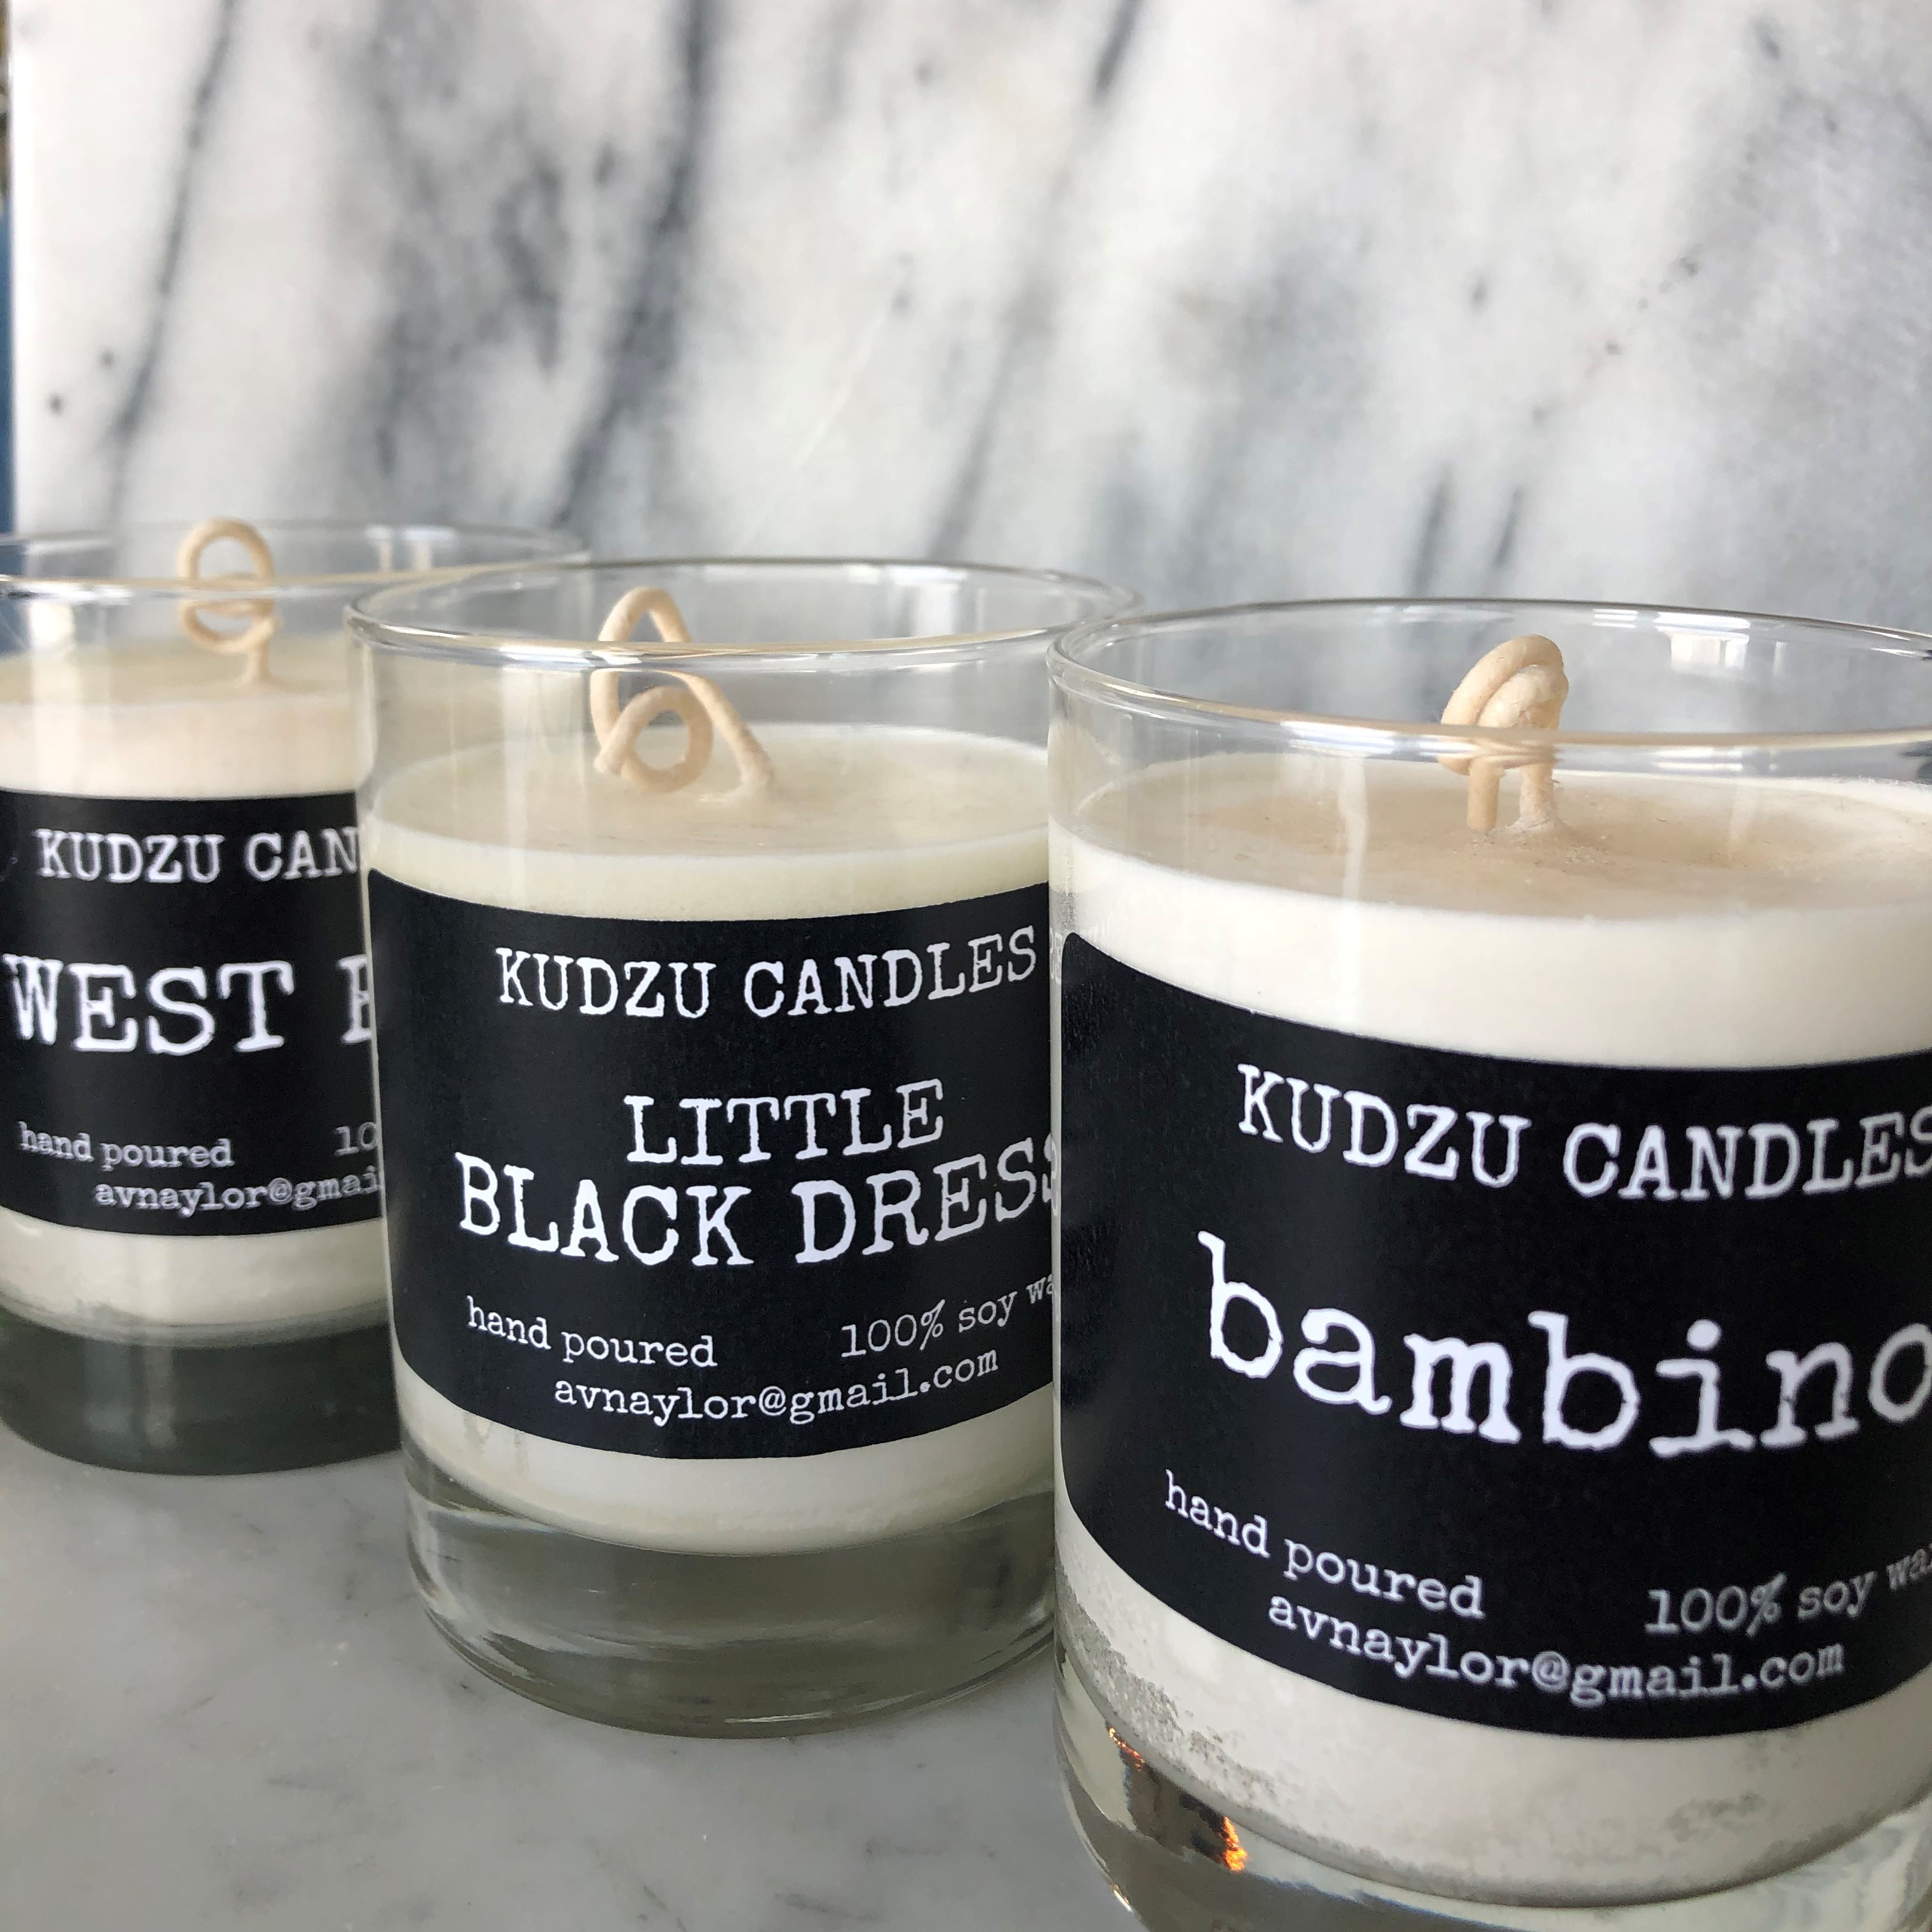 Product Image for Kudzu Candles